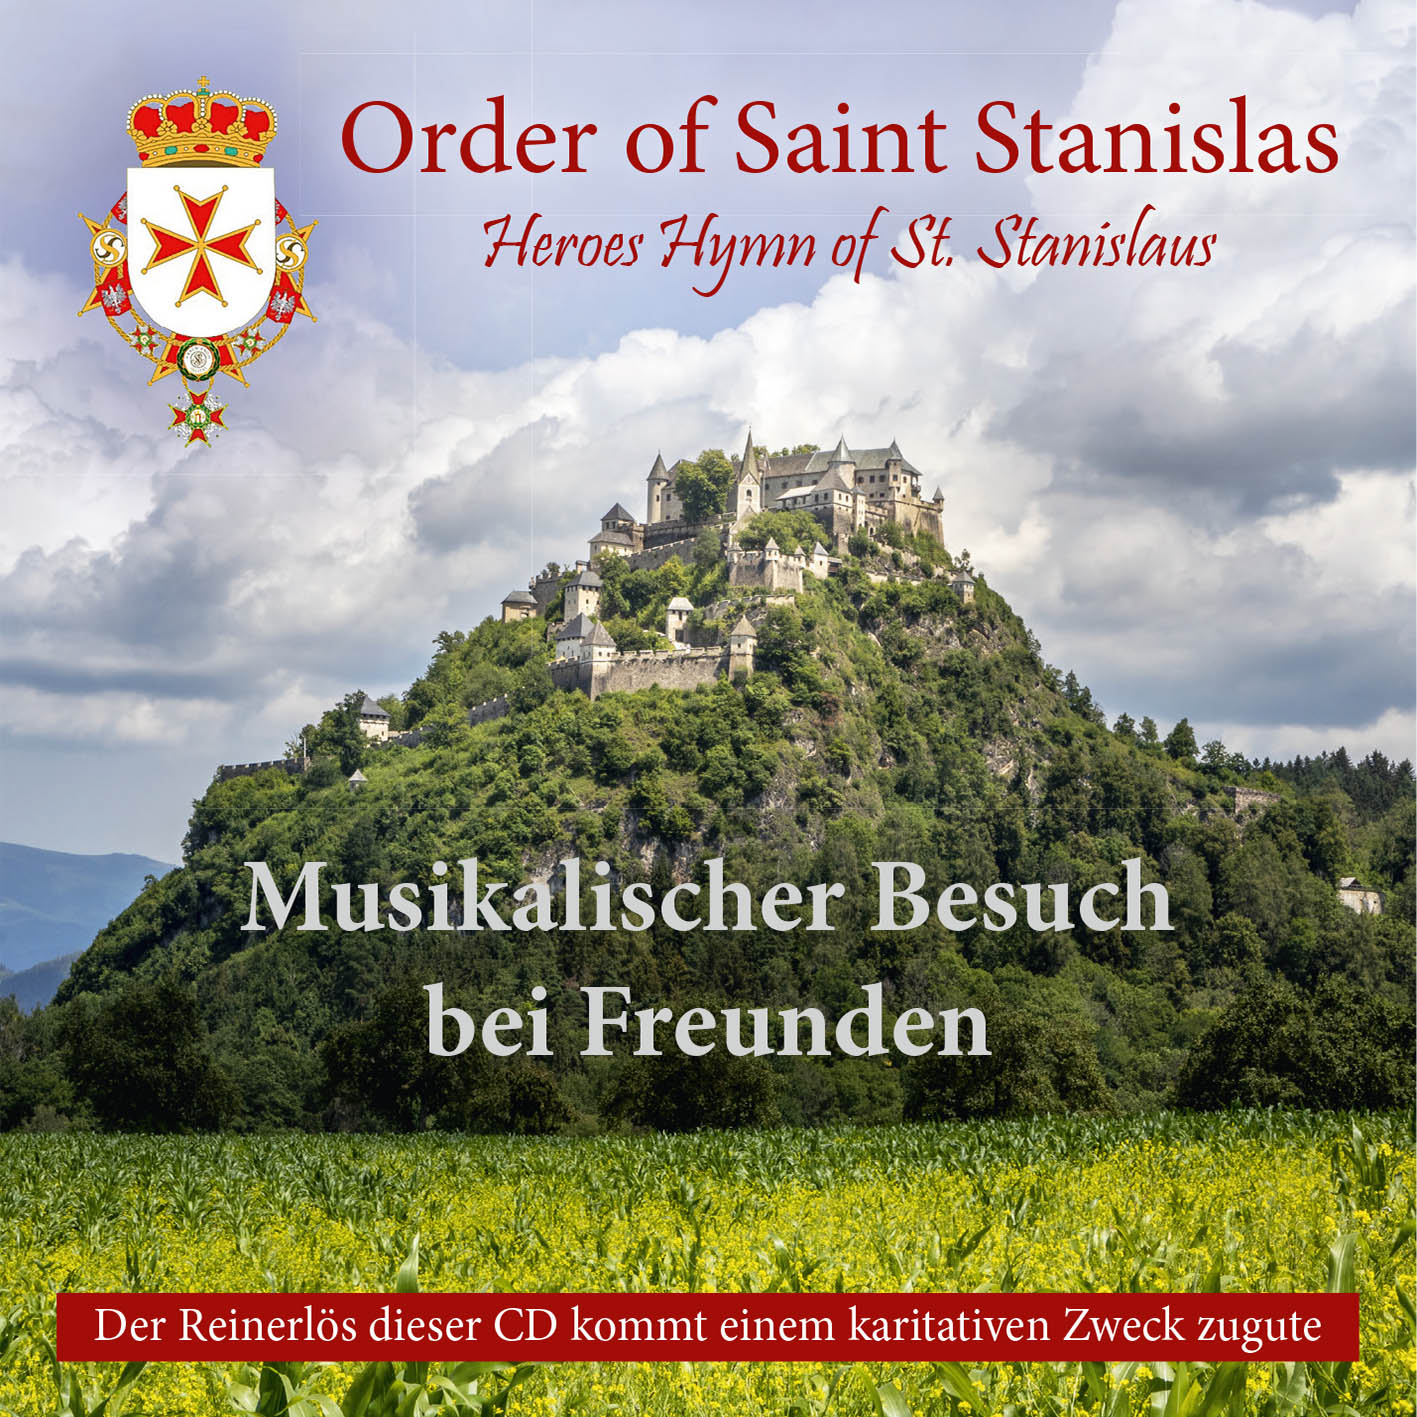 DRCD-2304 Order of Saint Stanislas "Musikalischer Besuch bei Freunden"